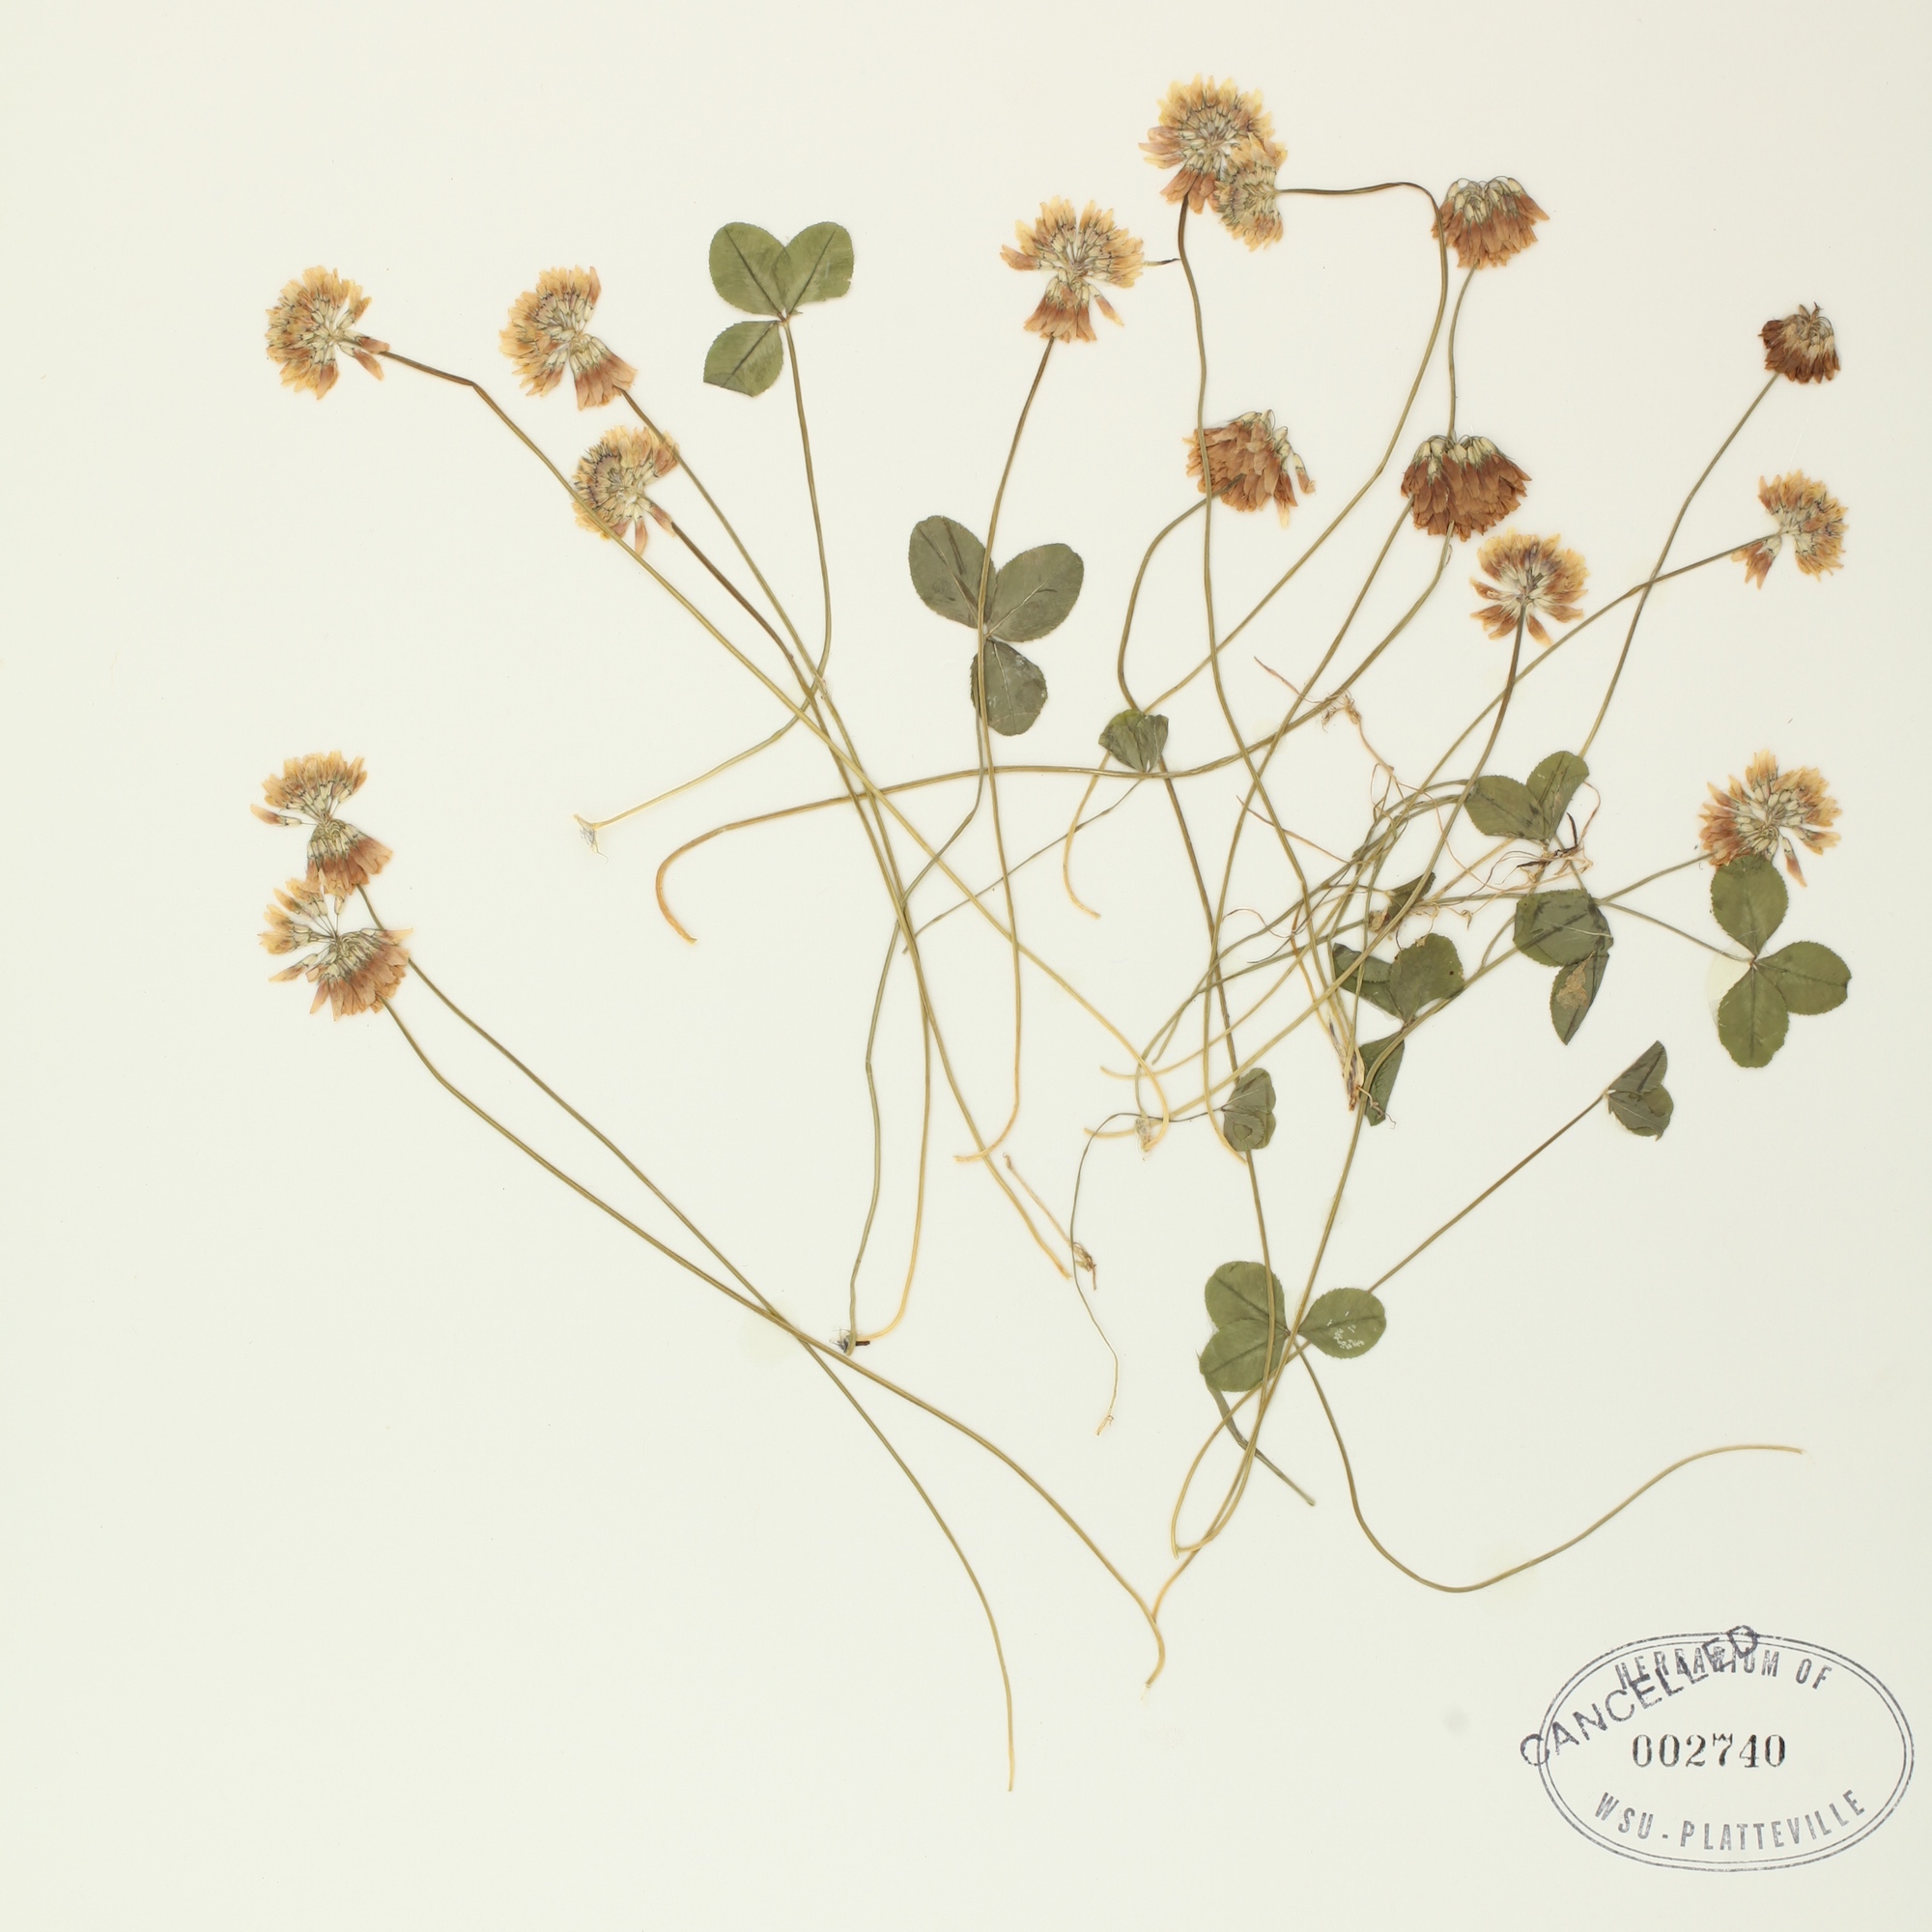 Specimen photo of Trifolium repens from Grant County, Wisconsin.